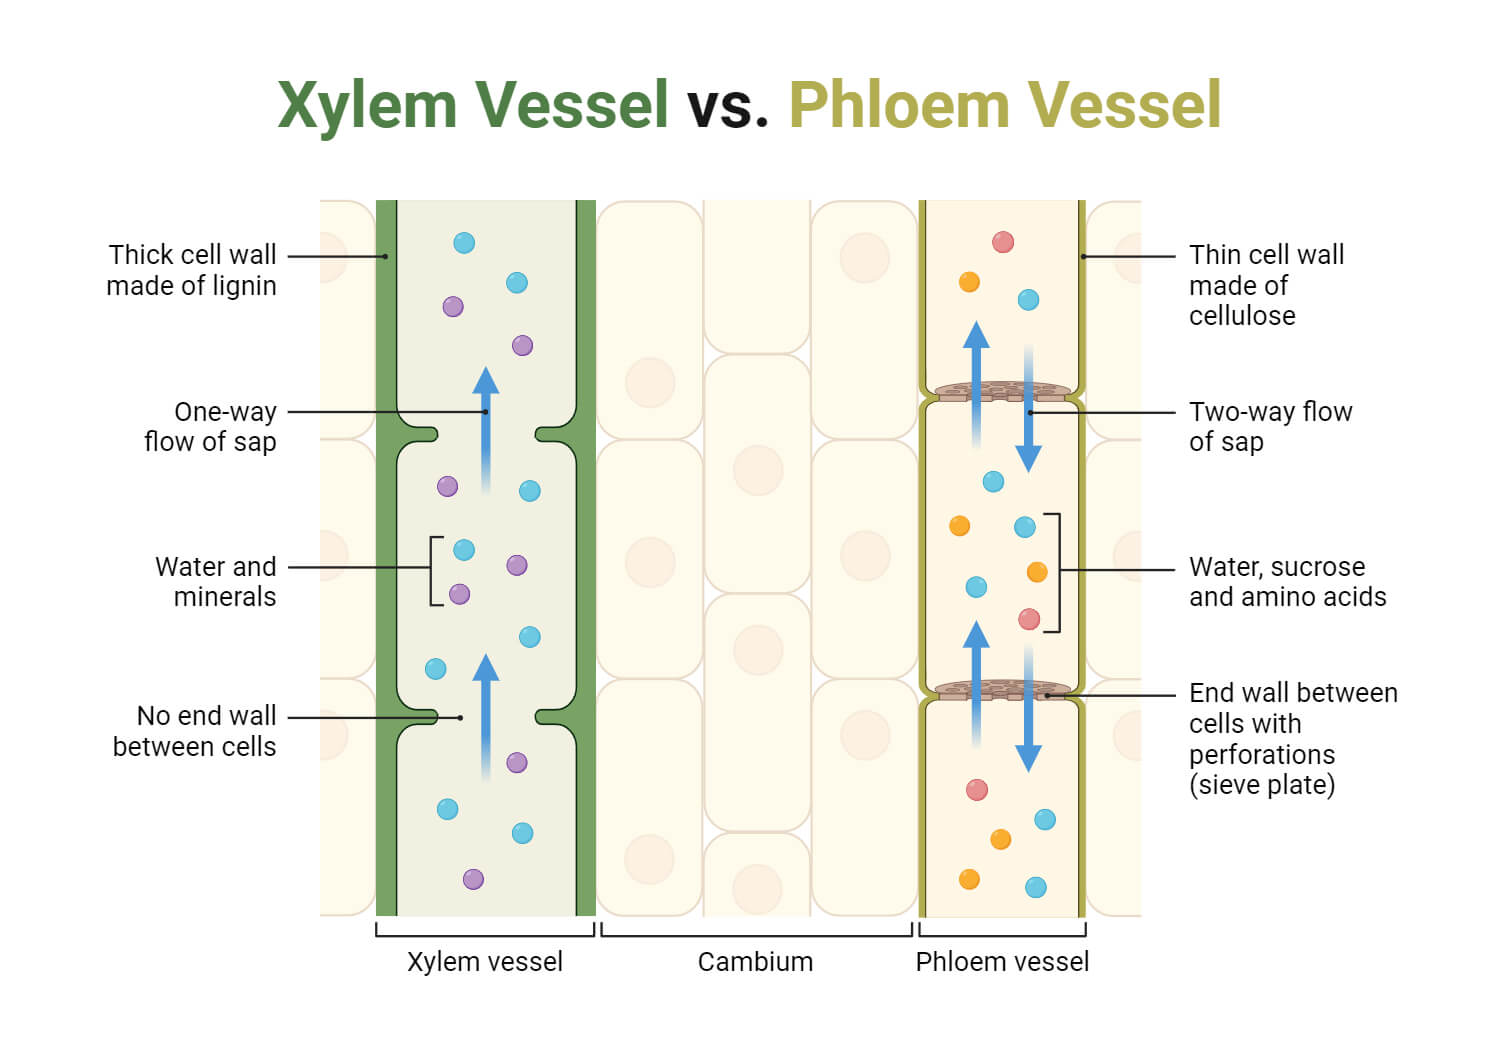 Xylem Vessel vs. Phloem Vessel